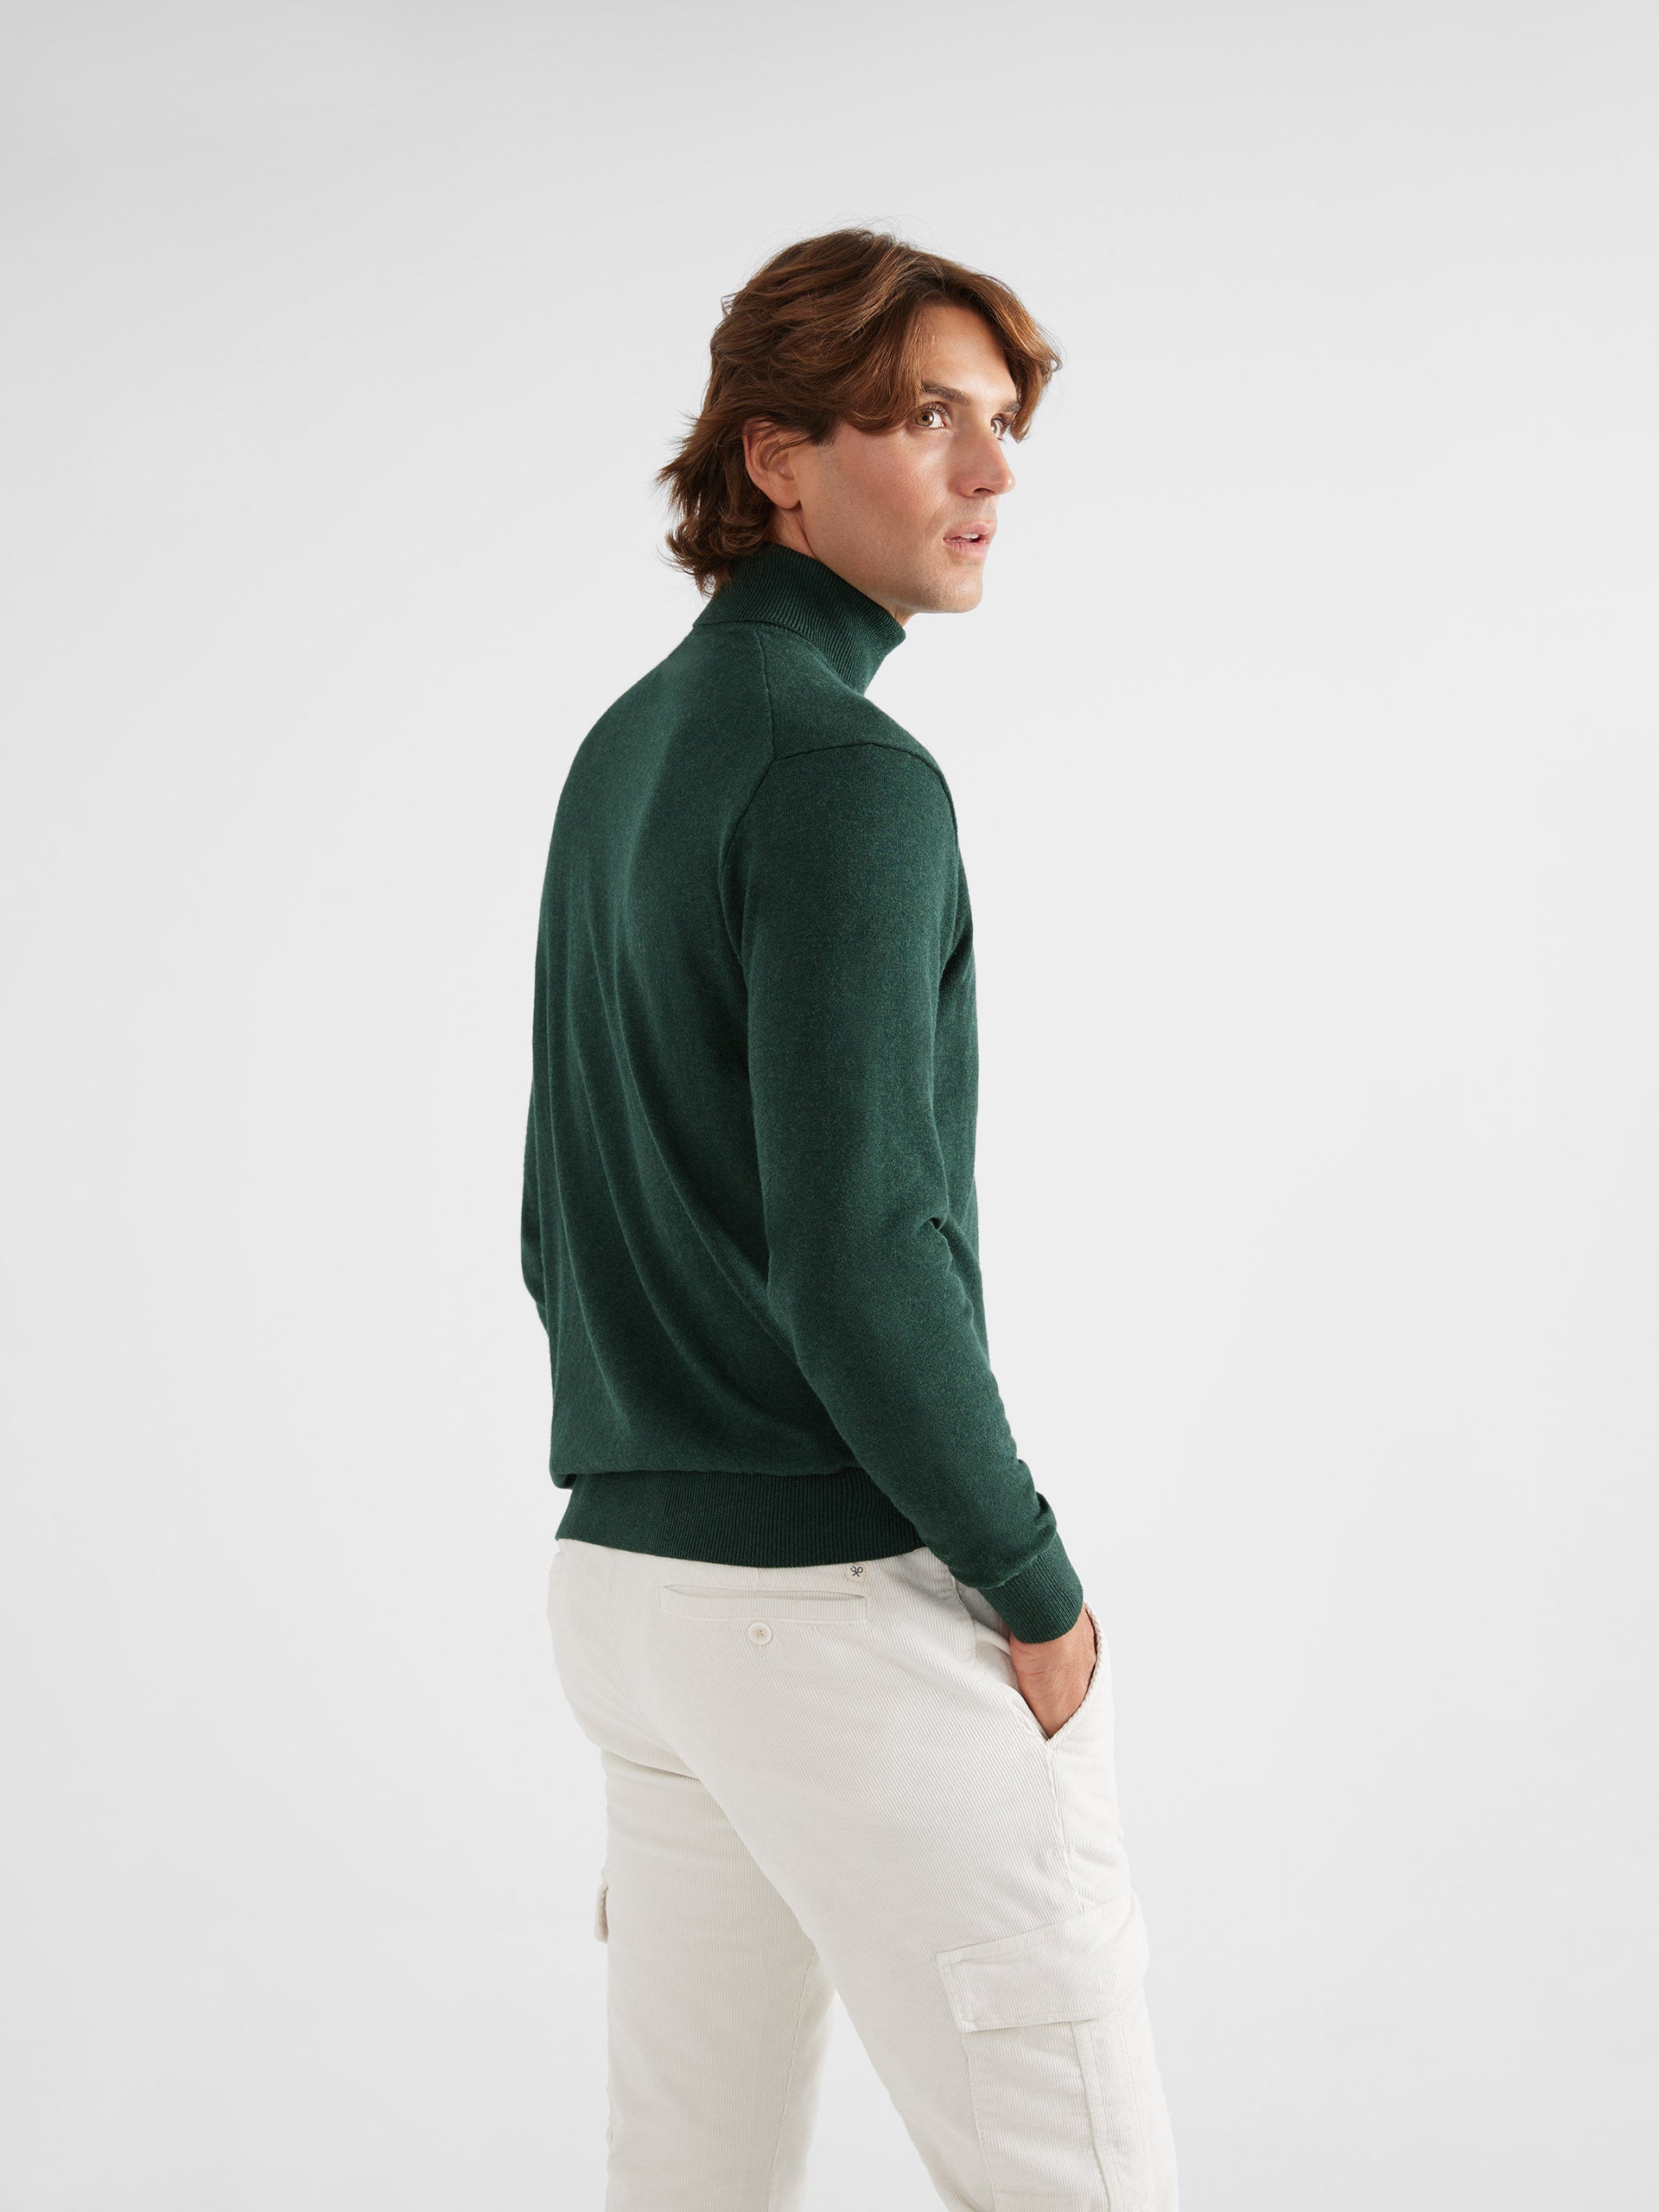 Plain dark green turtleneck sweater